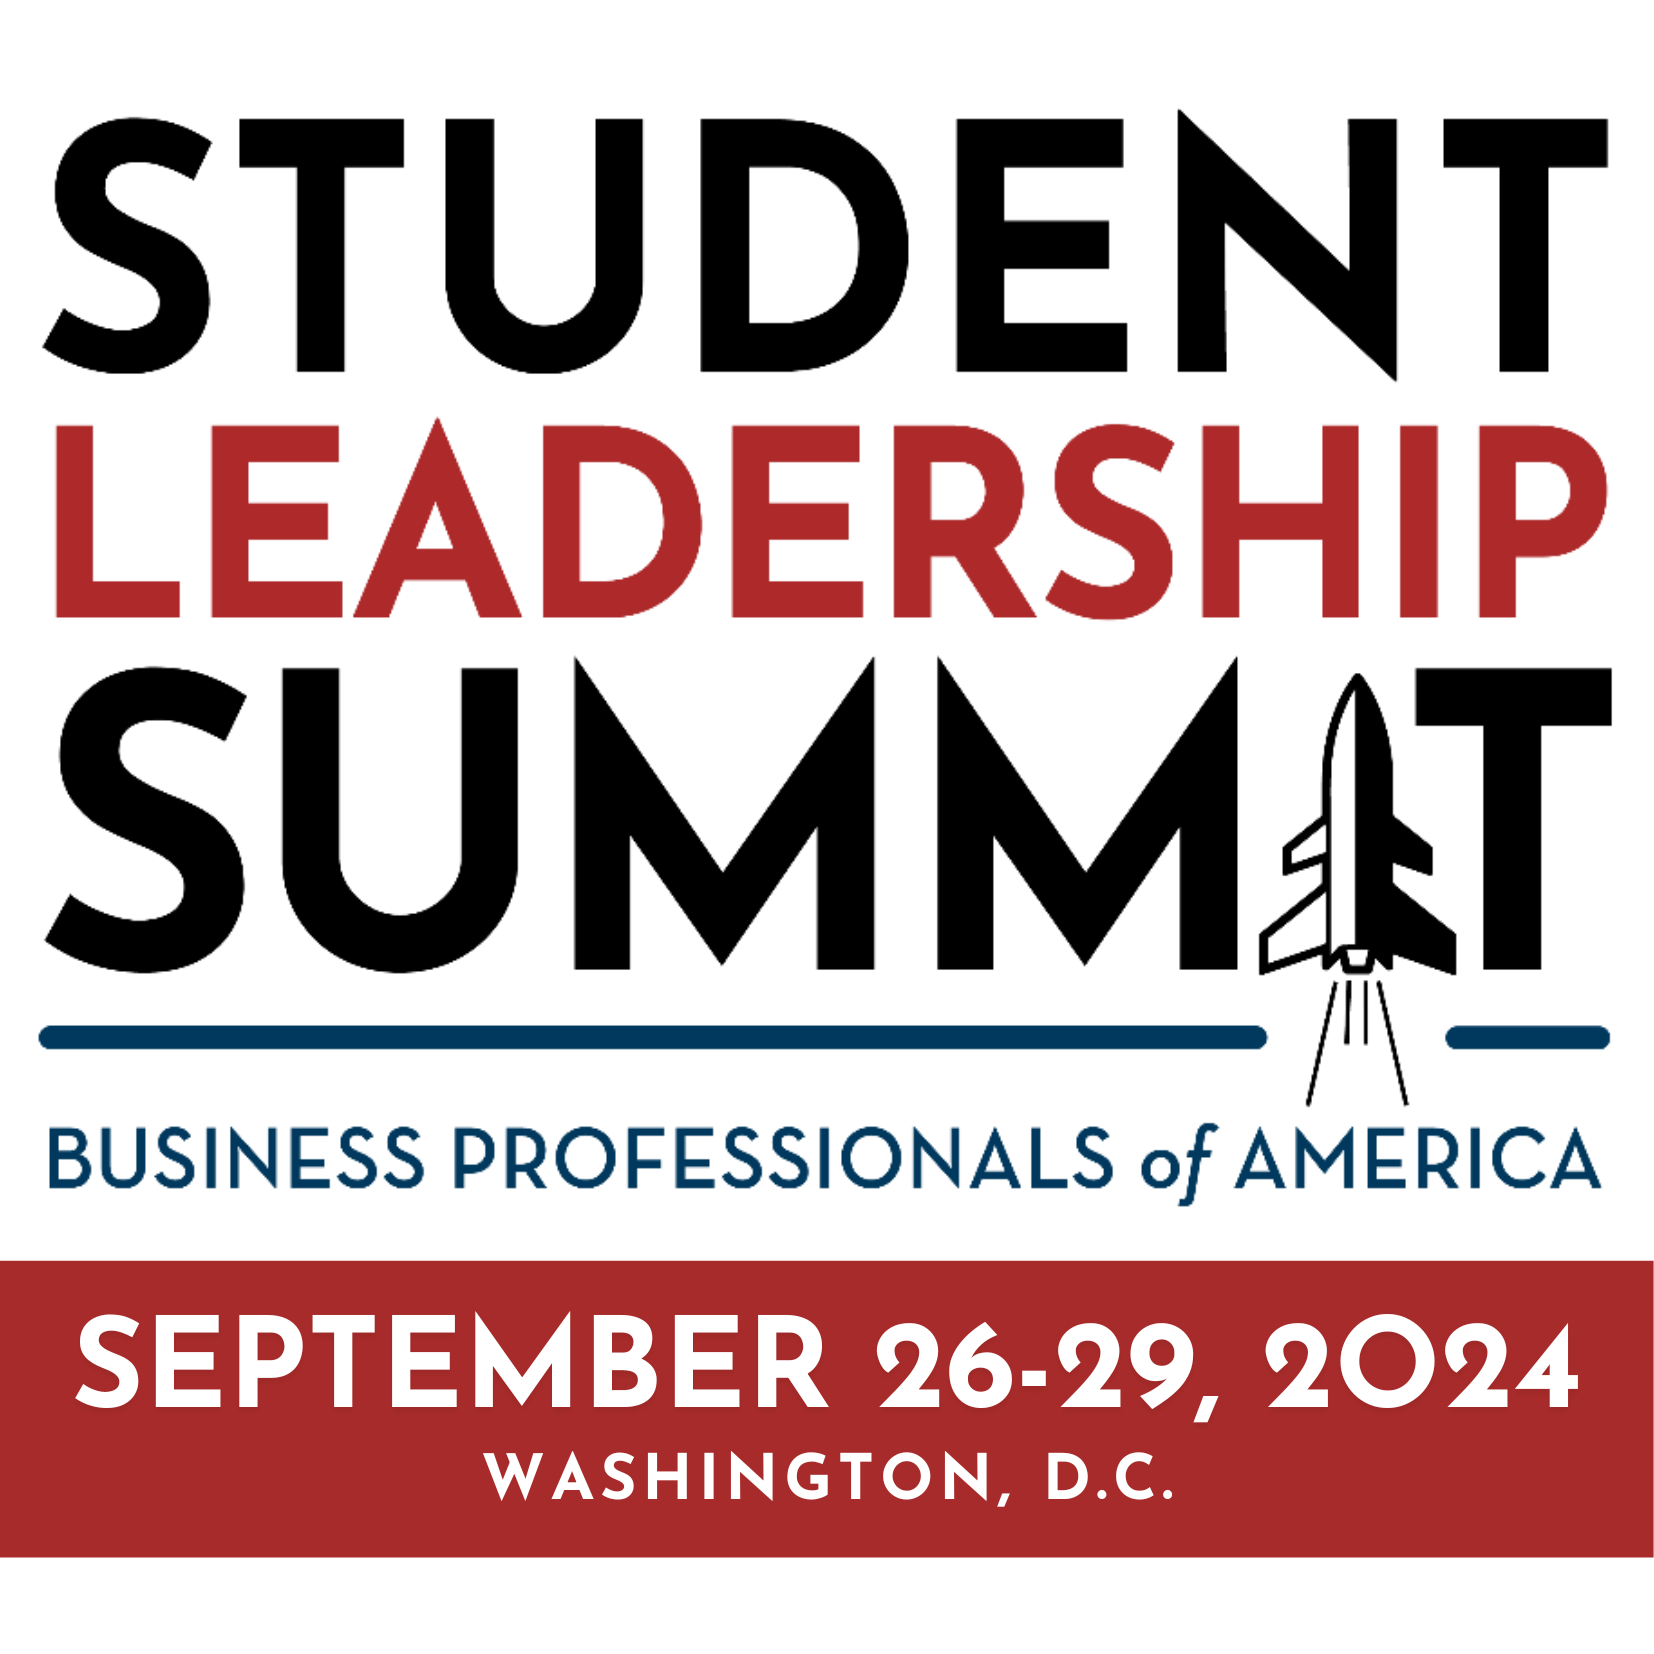 Student Leadership Summit - Business Professionals of America - September 26-29 Washington, DC